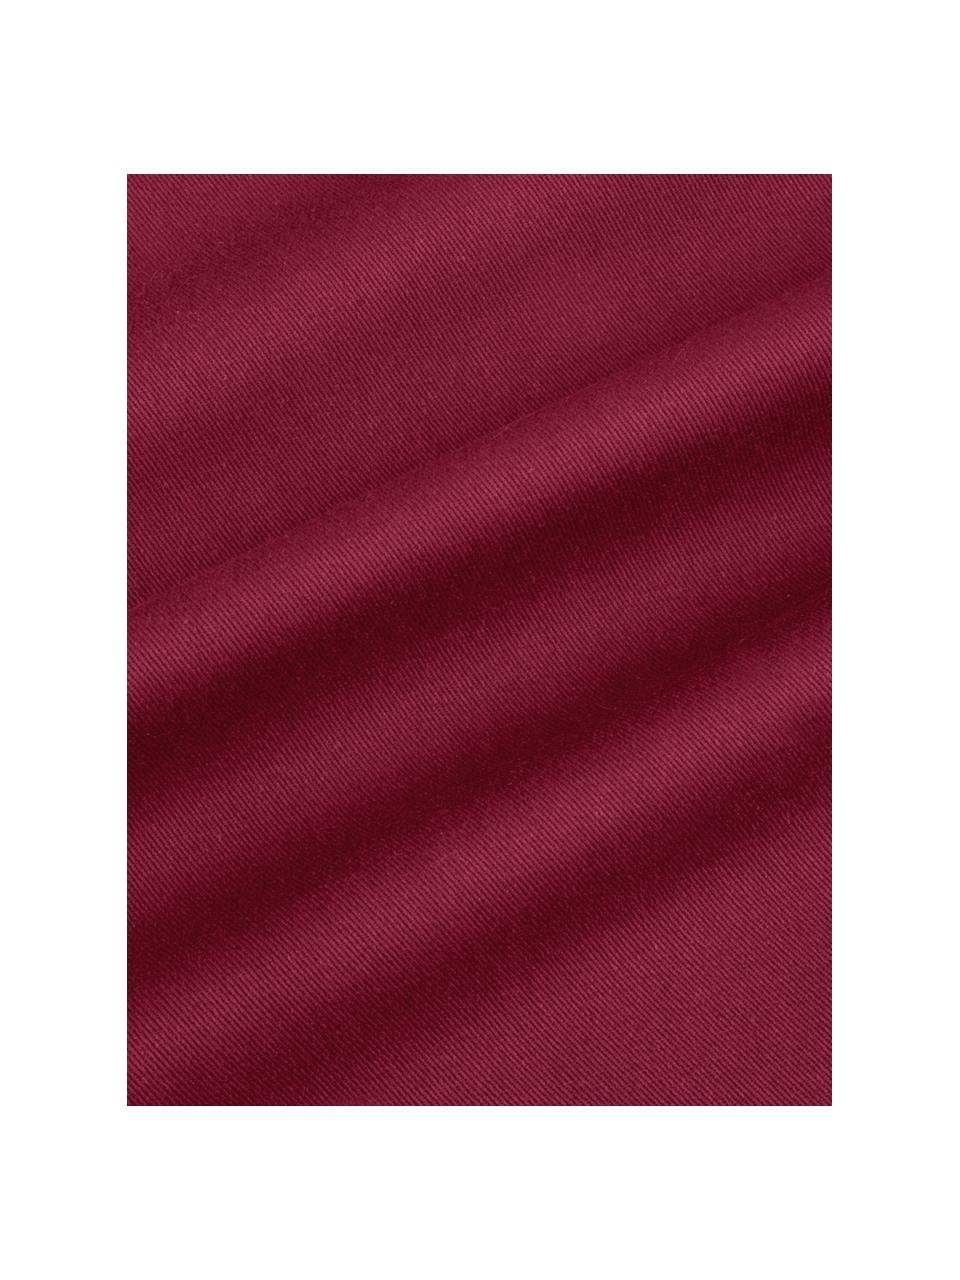 Baumwoll-Kissenhülle Mads in Rot, 100% Baumwolle, Rot, 30 x 50 cm